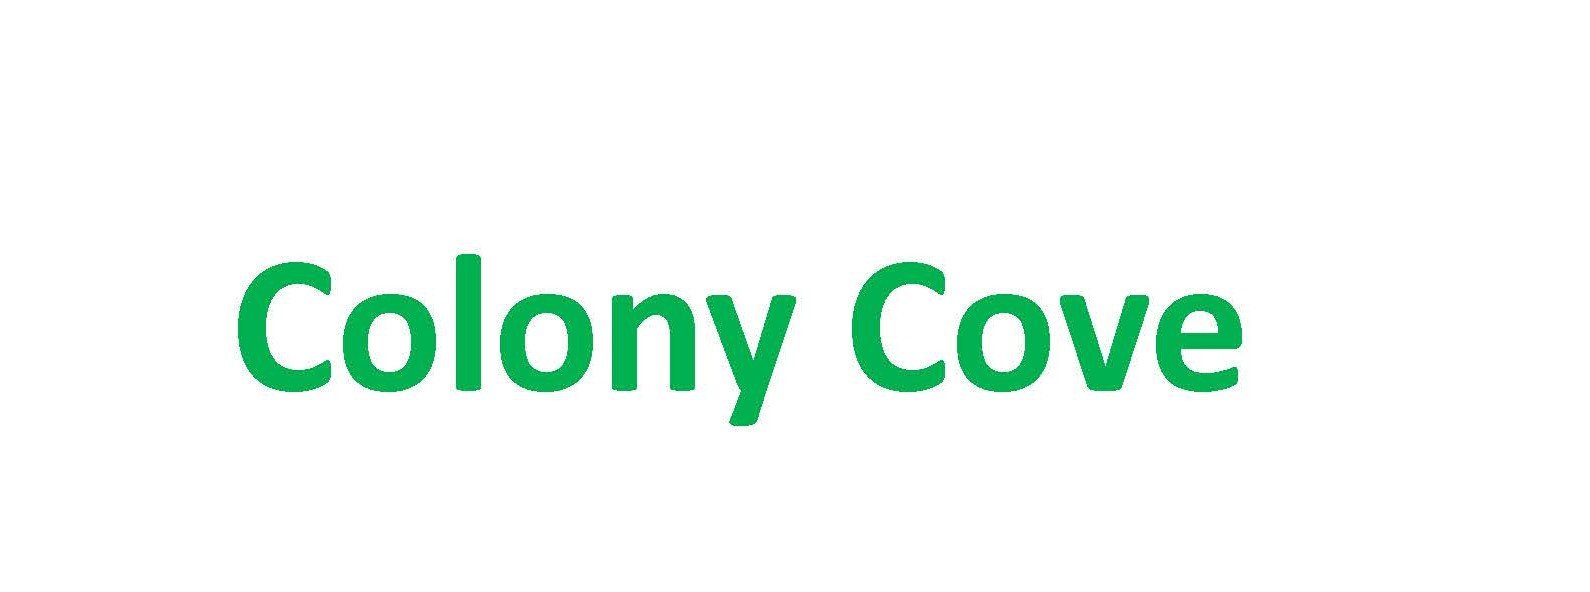 Colony Cove2.jpg